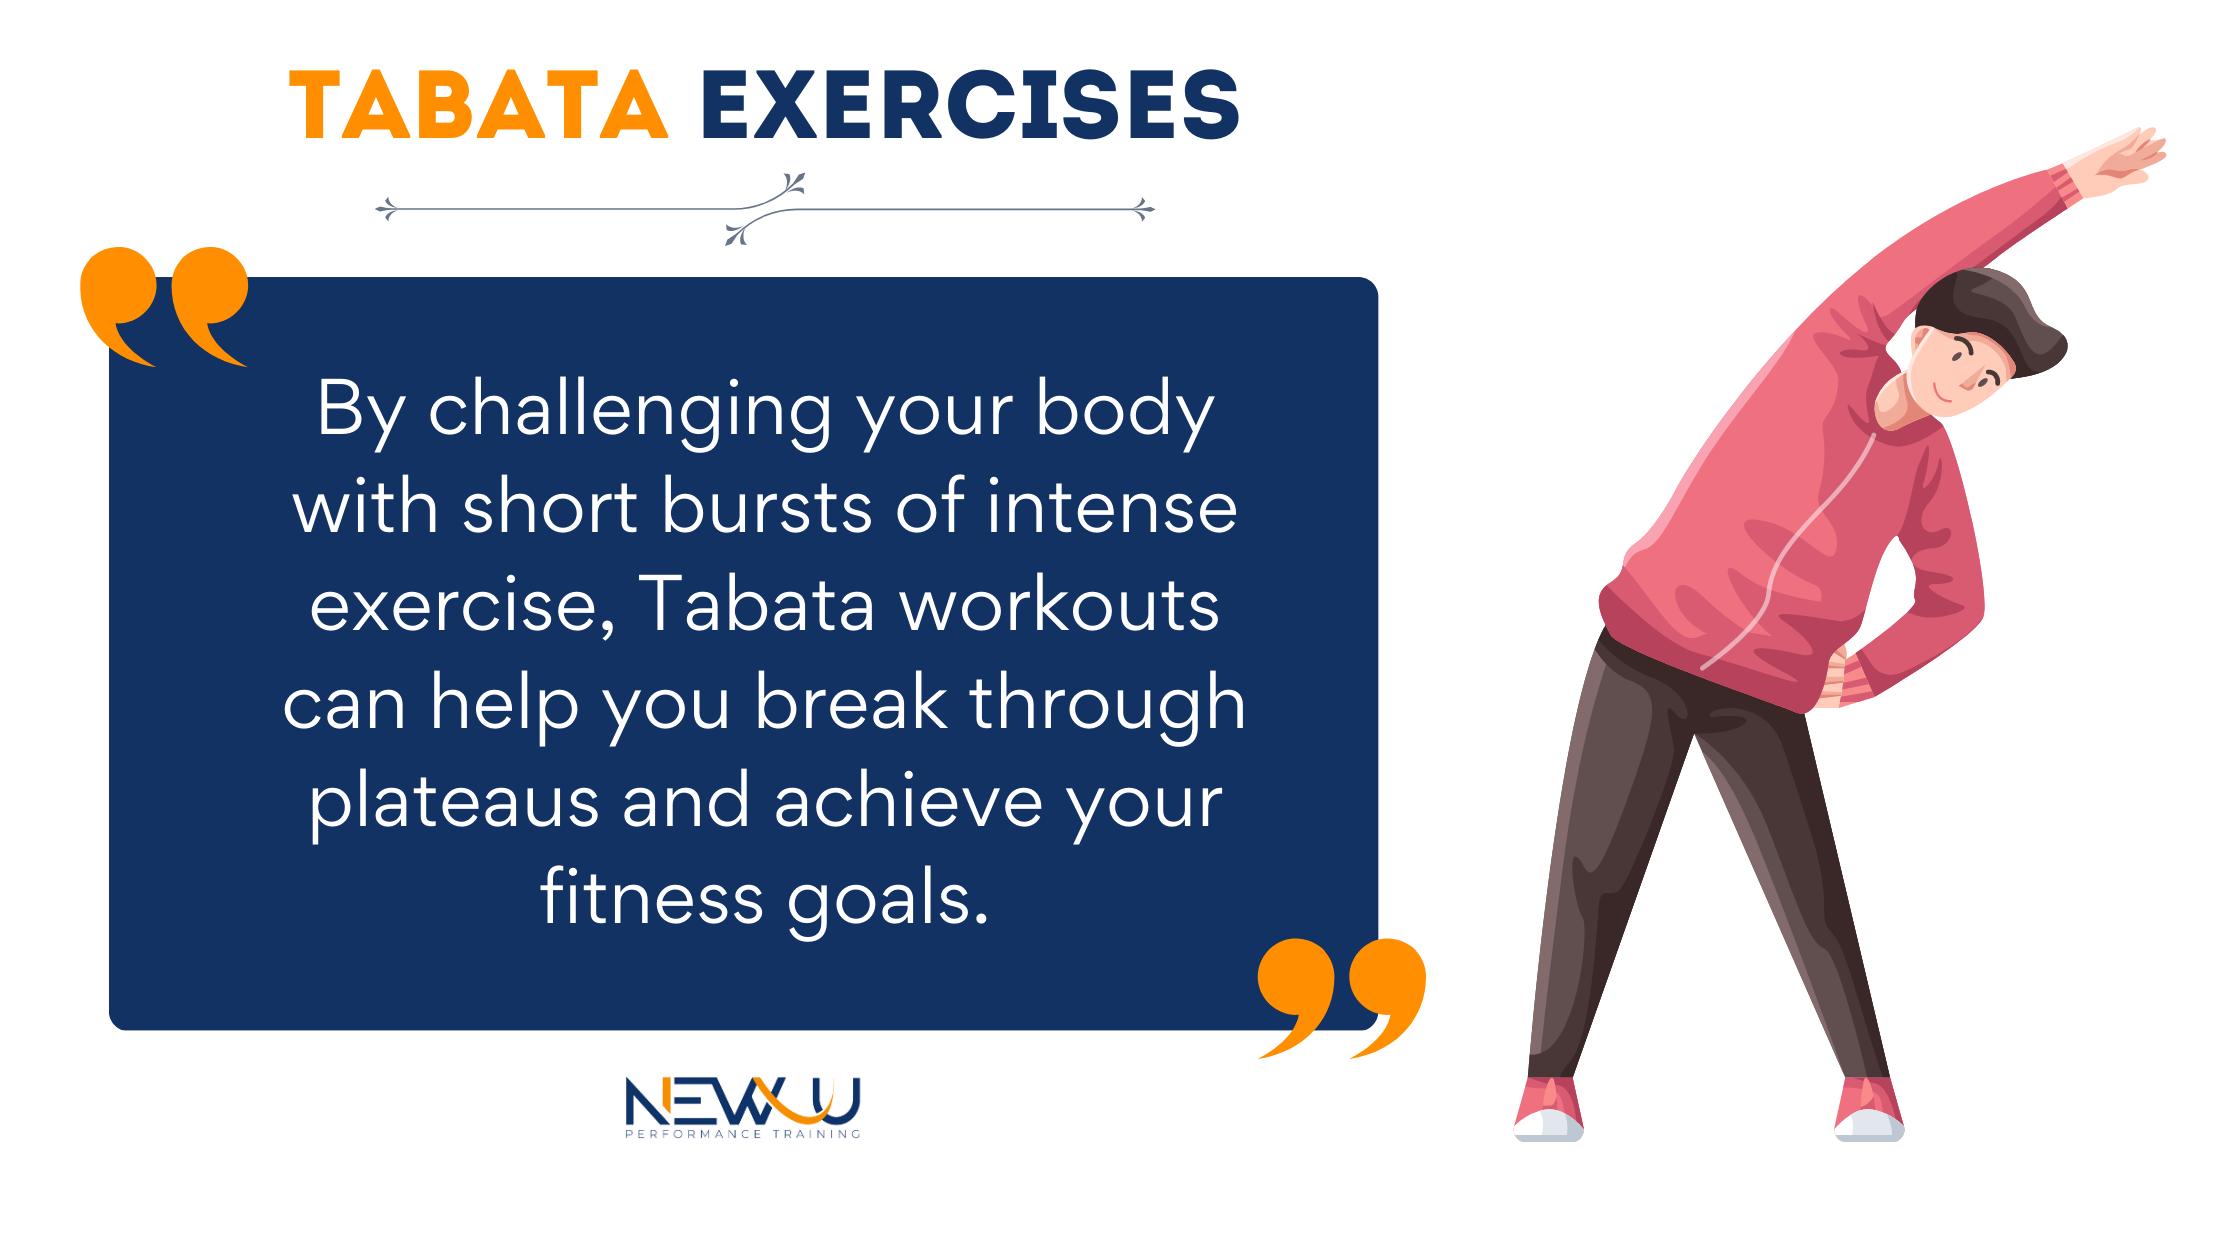 Tabata Workouts